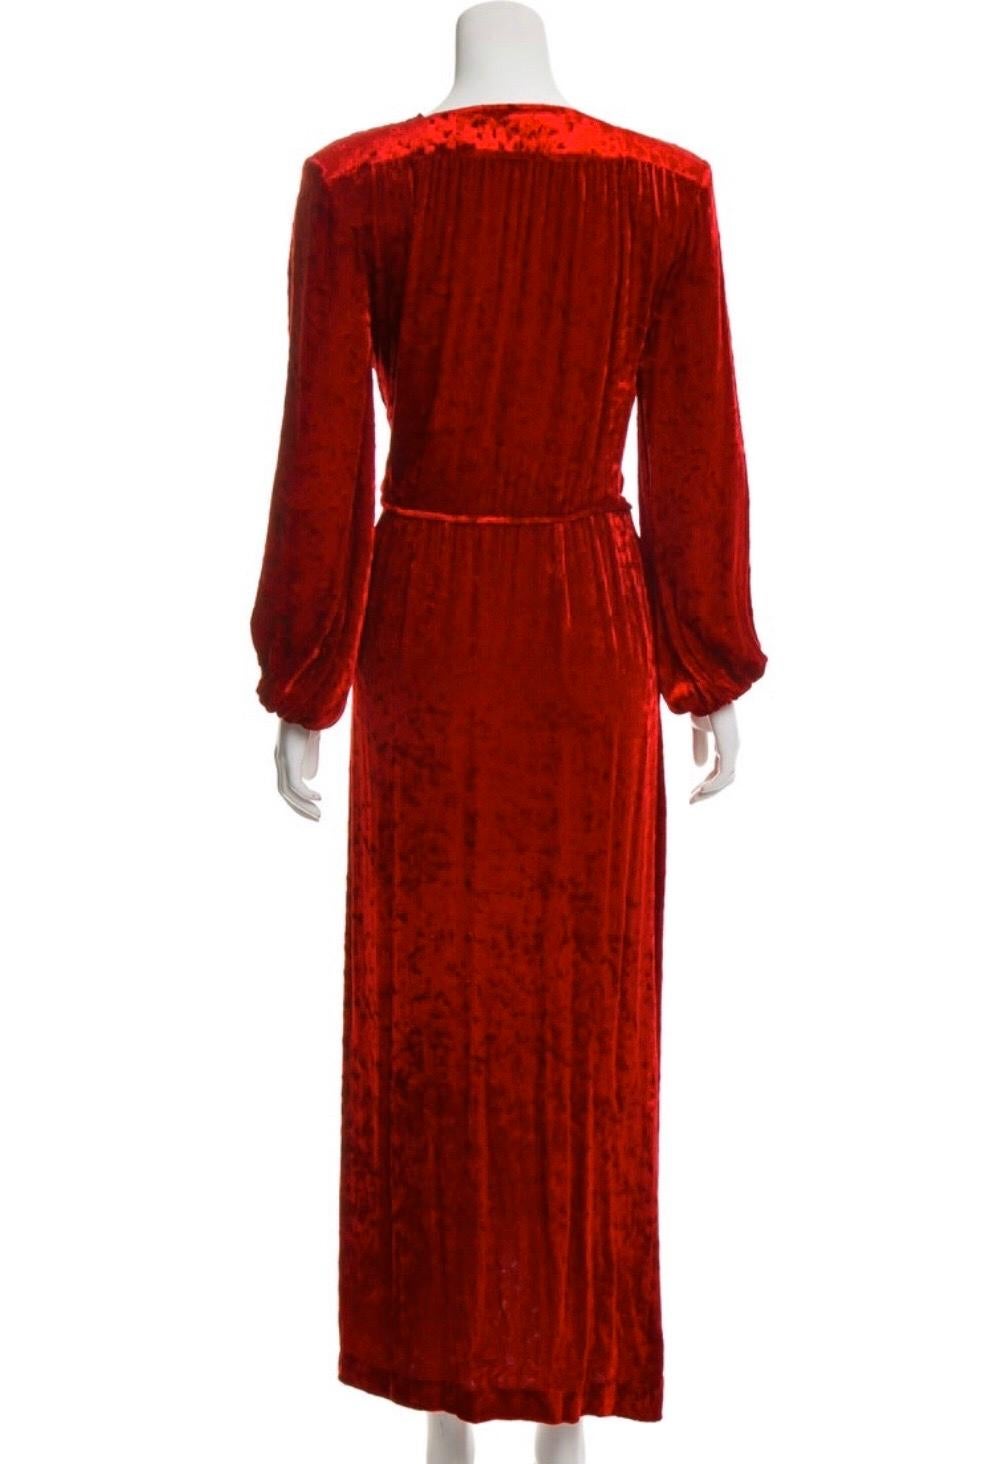 1980s Yves Saint Laurent red velvet evening gown. Condition: Excellent.

Size XS / US 2/ FR 34

35